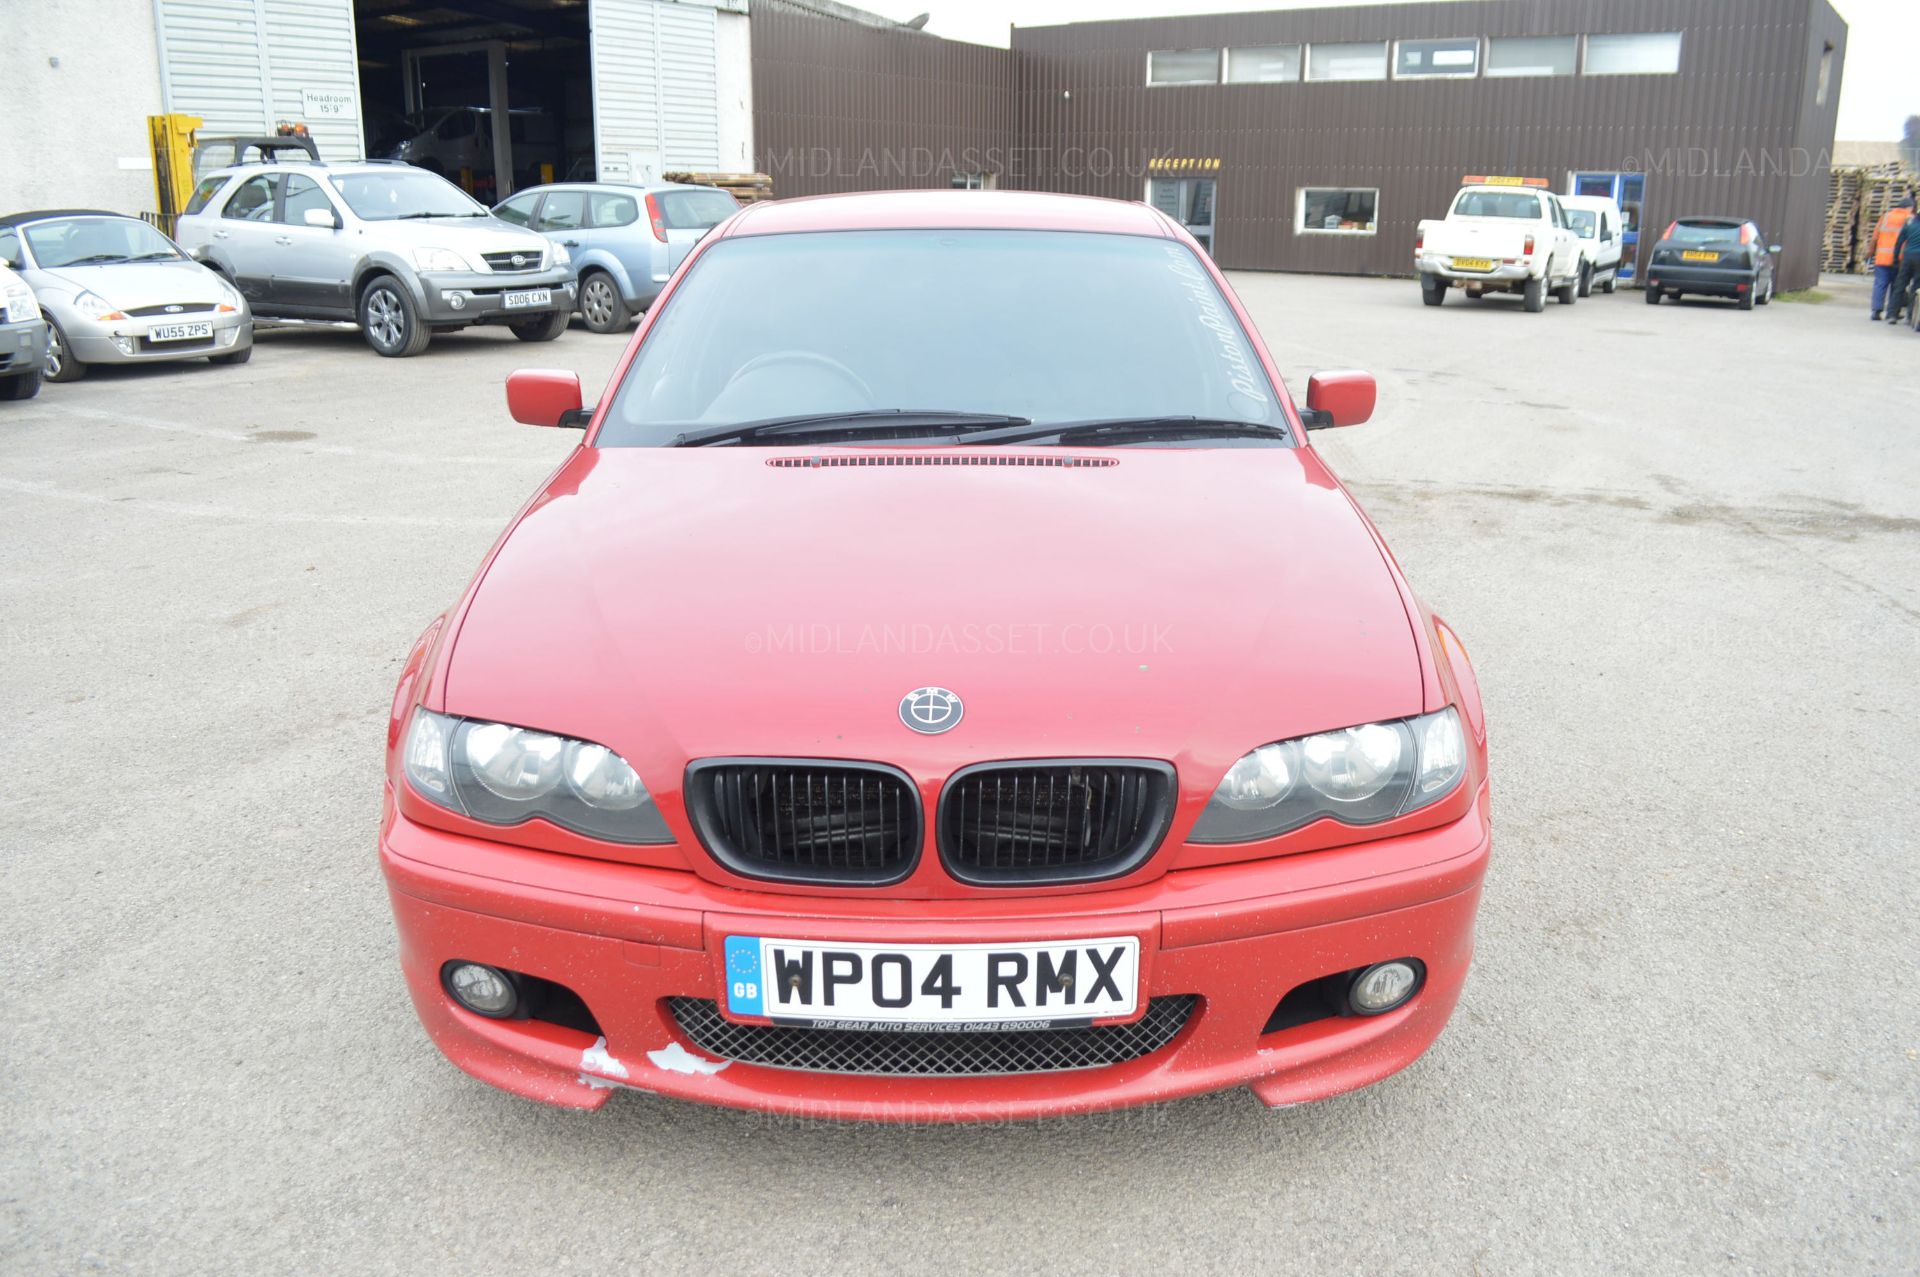 2004/04 REG BMW 320D SPORT 2.0 MANUAL METALLIC RED *NO VAT* - Image 2 of 26